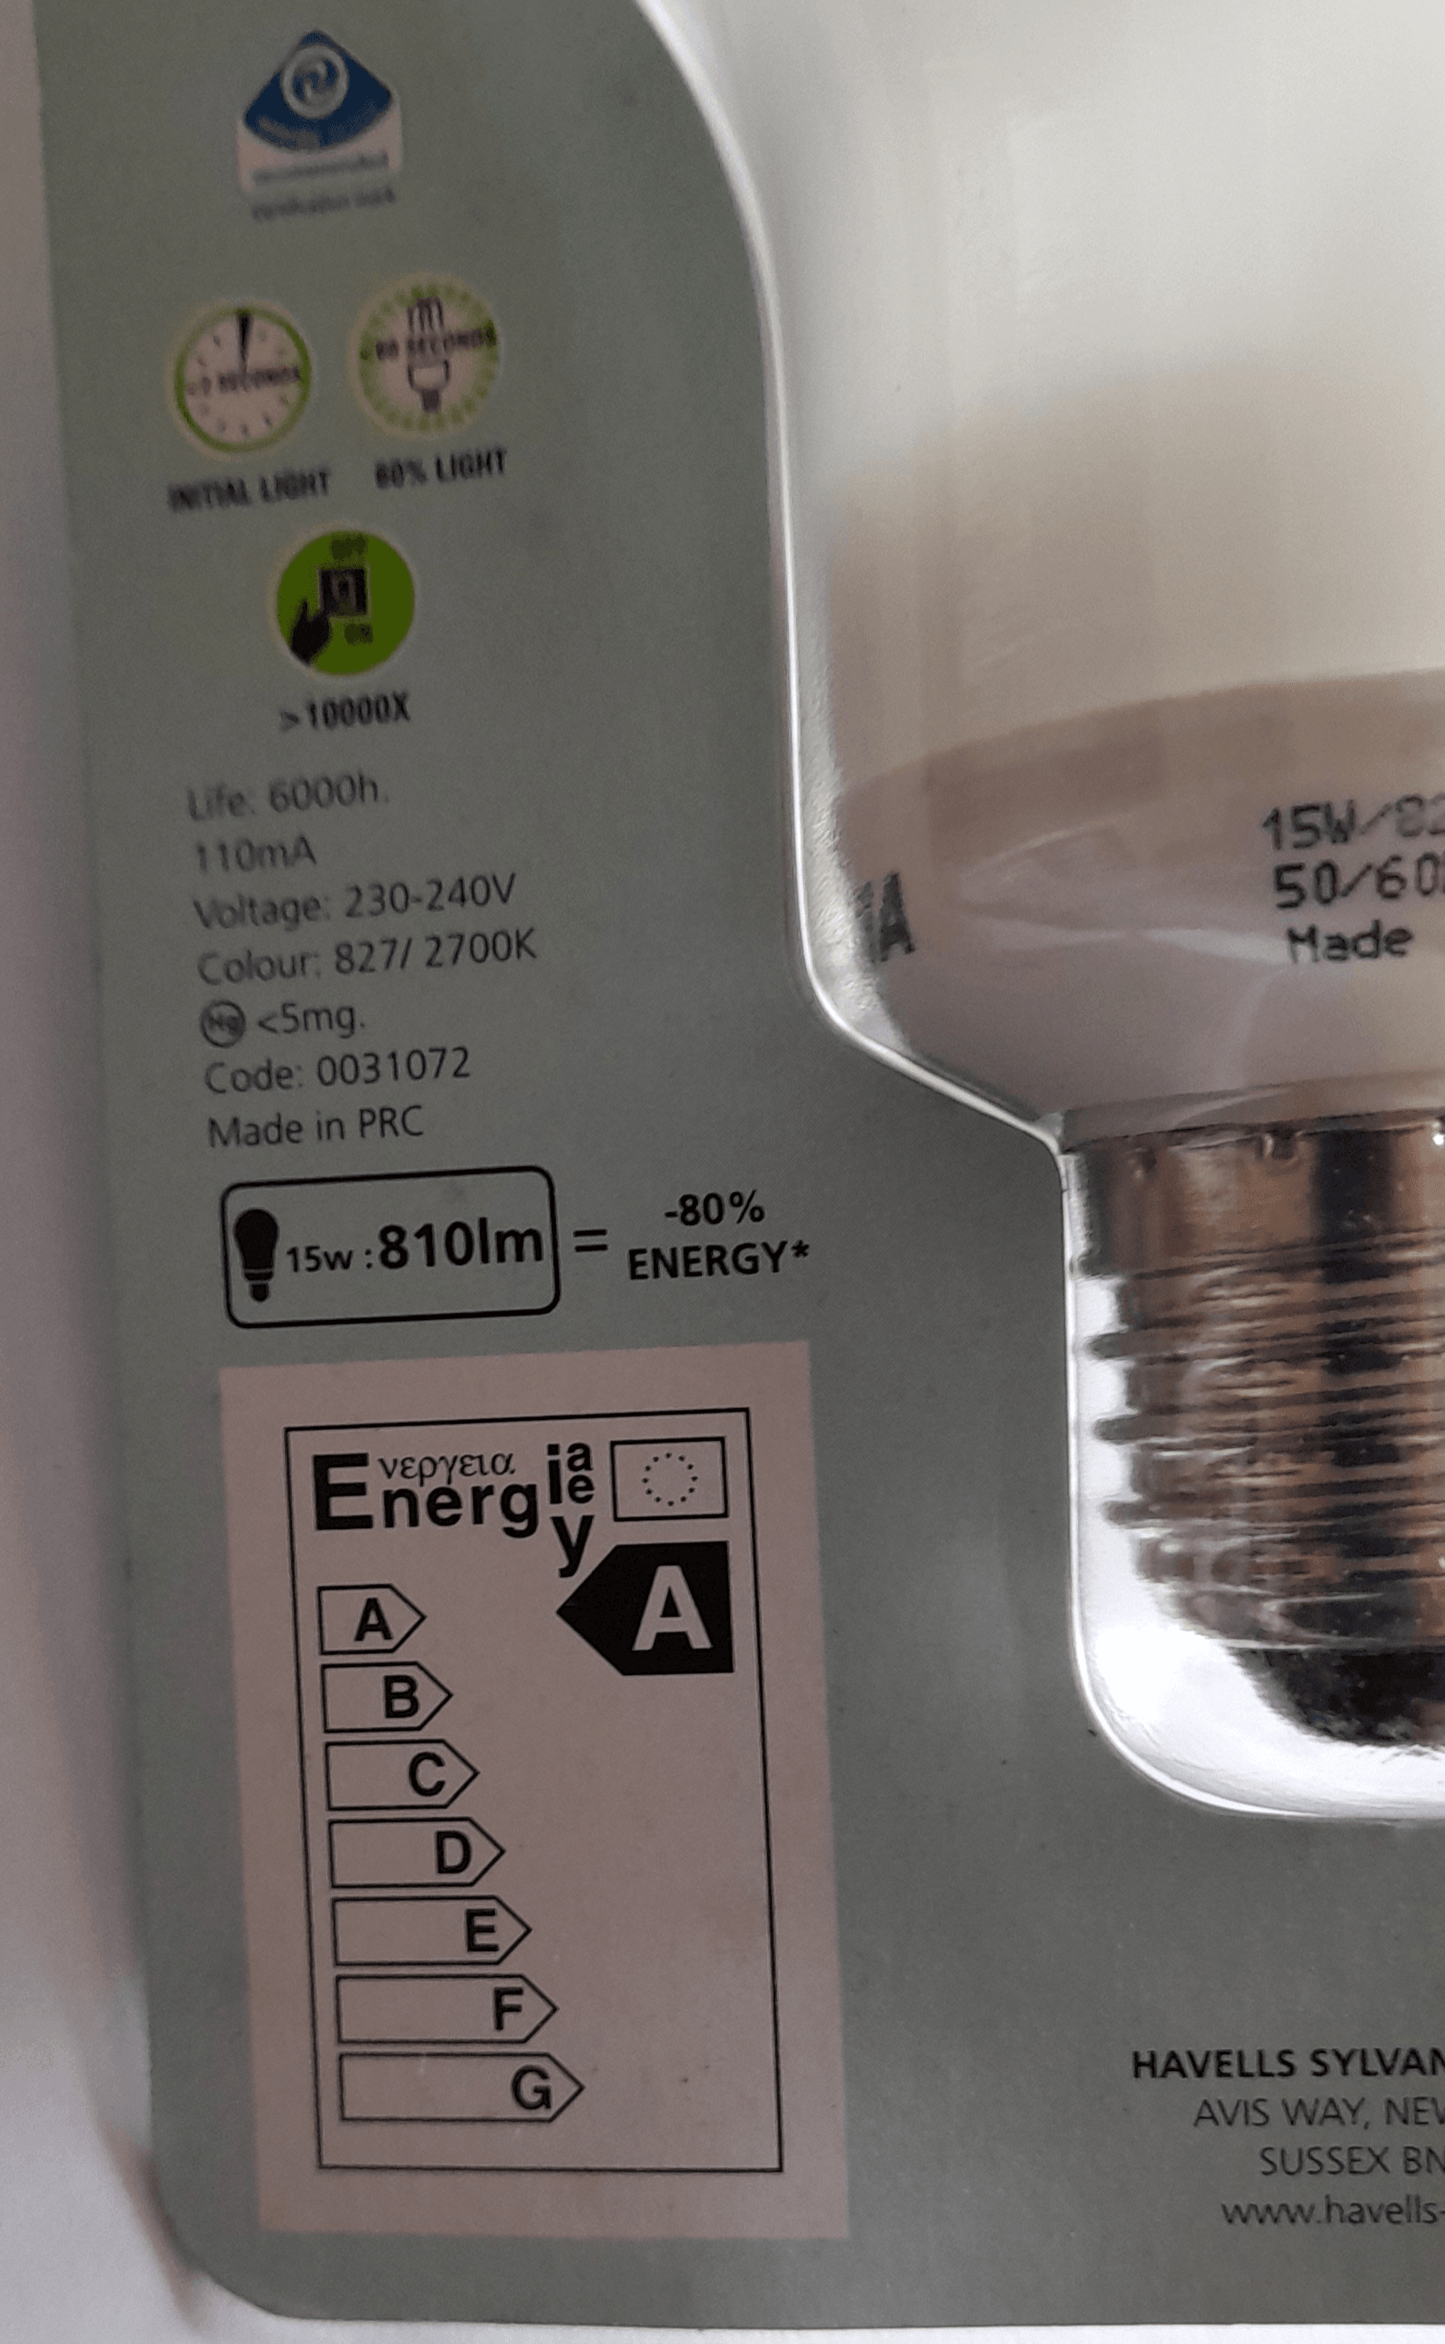 MINI LYNX COMPACT ENERGY SAVER 15W WARM WHITE E27 / ES CAP By SYLVANIA - Beachcomber Lighting